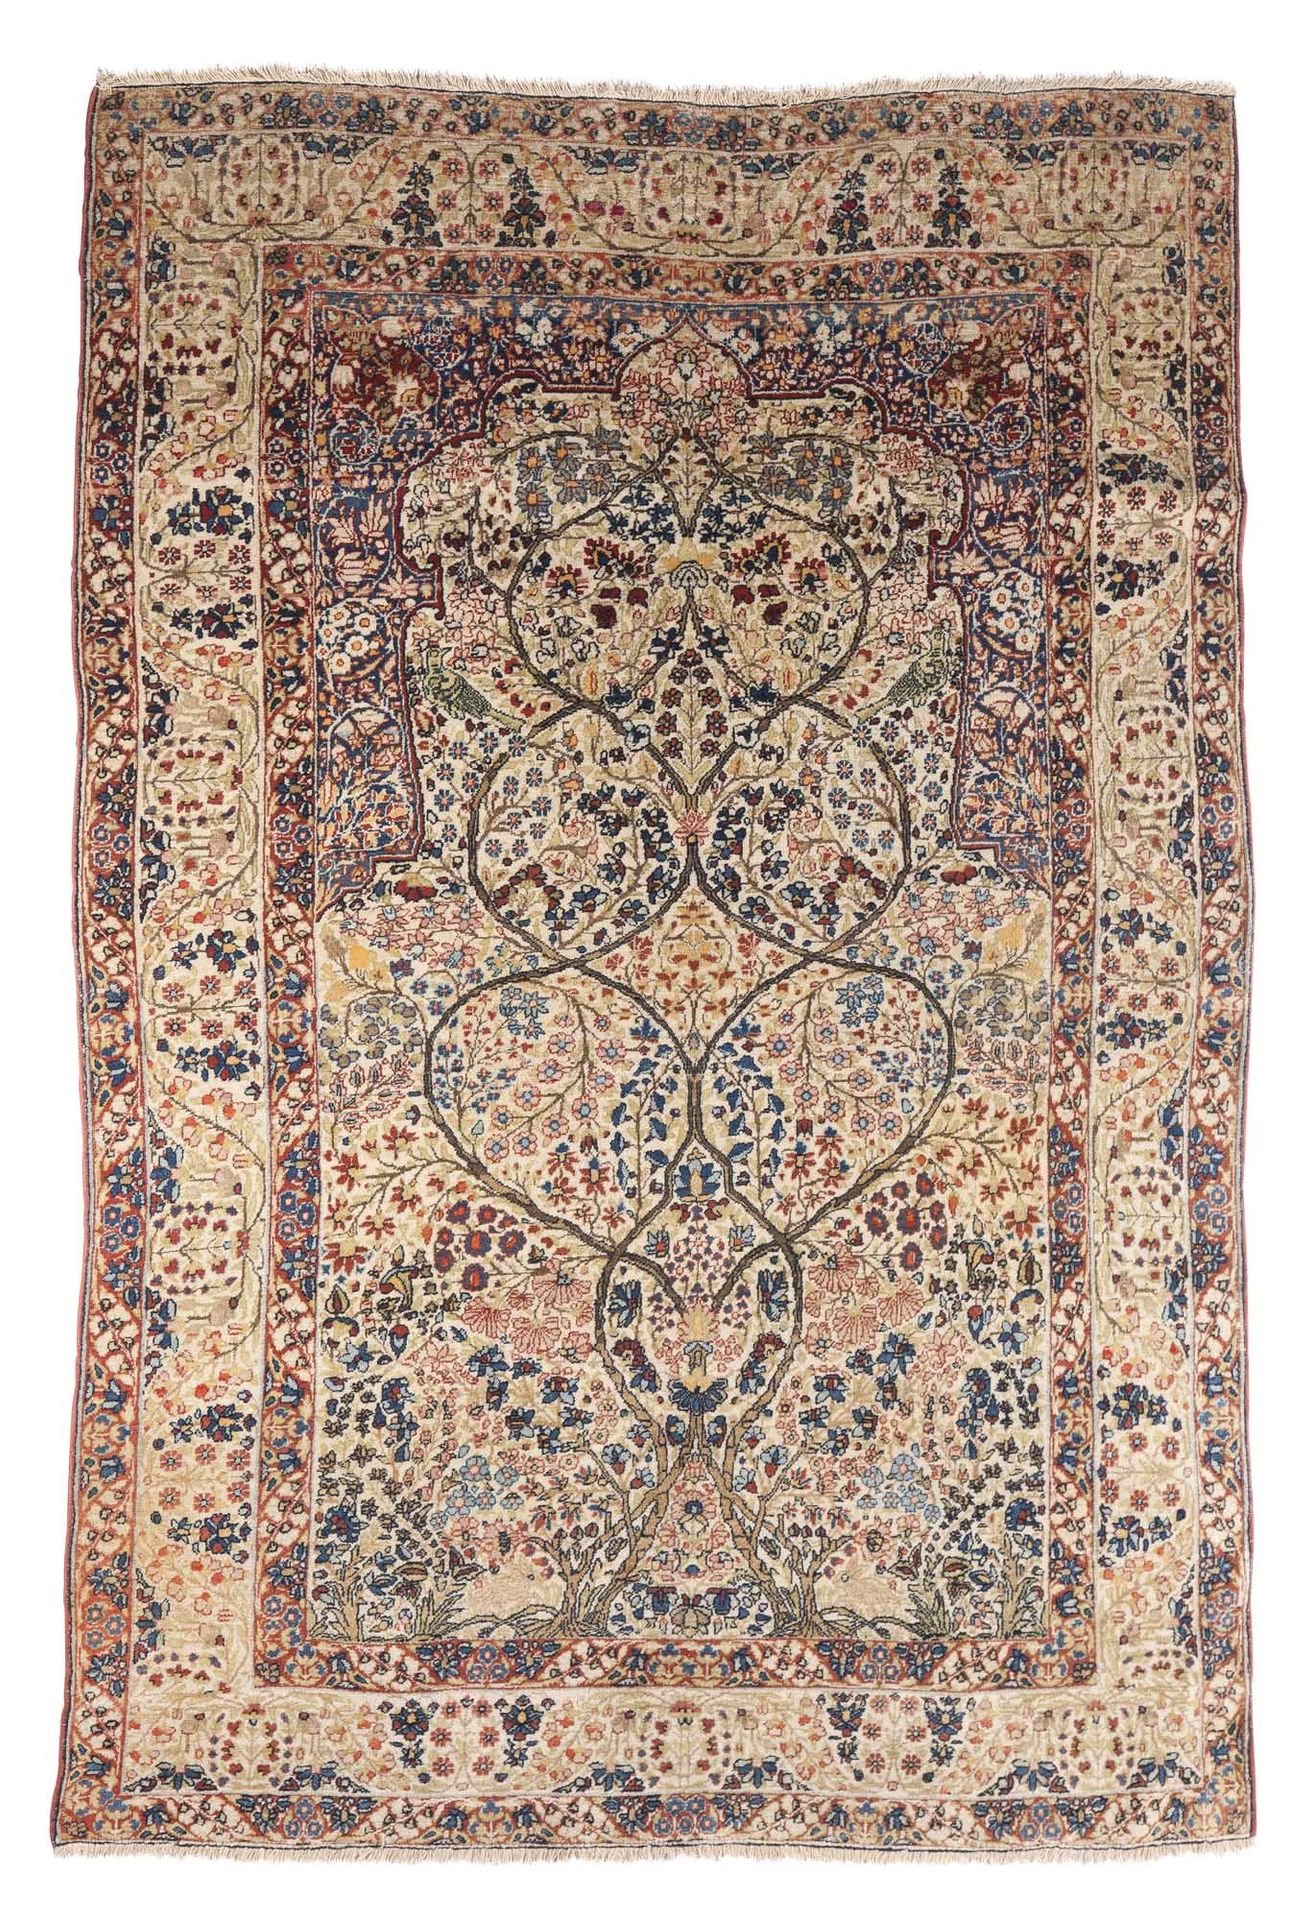 Null KIRMAN-Teppich (Persien) Ende des 19. Jahrhunderts.

Jahrhundert. Maße: 206&hellip;